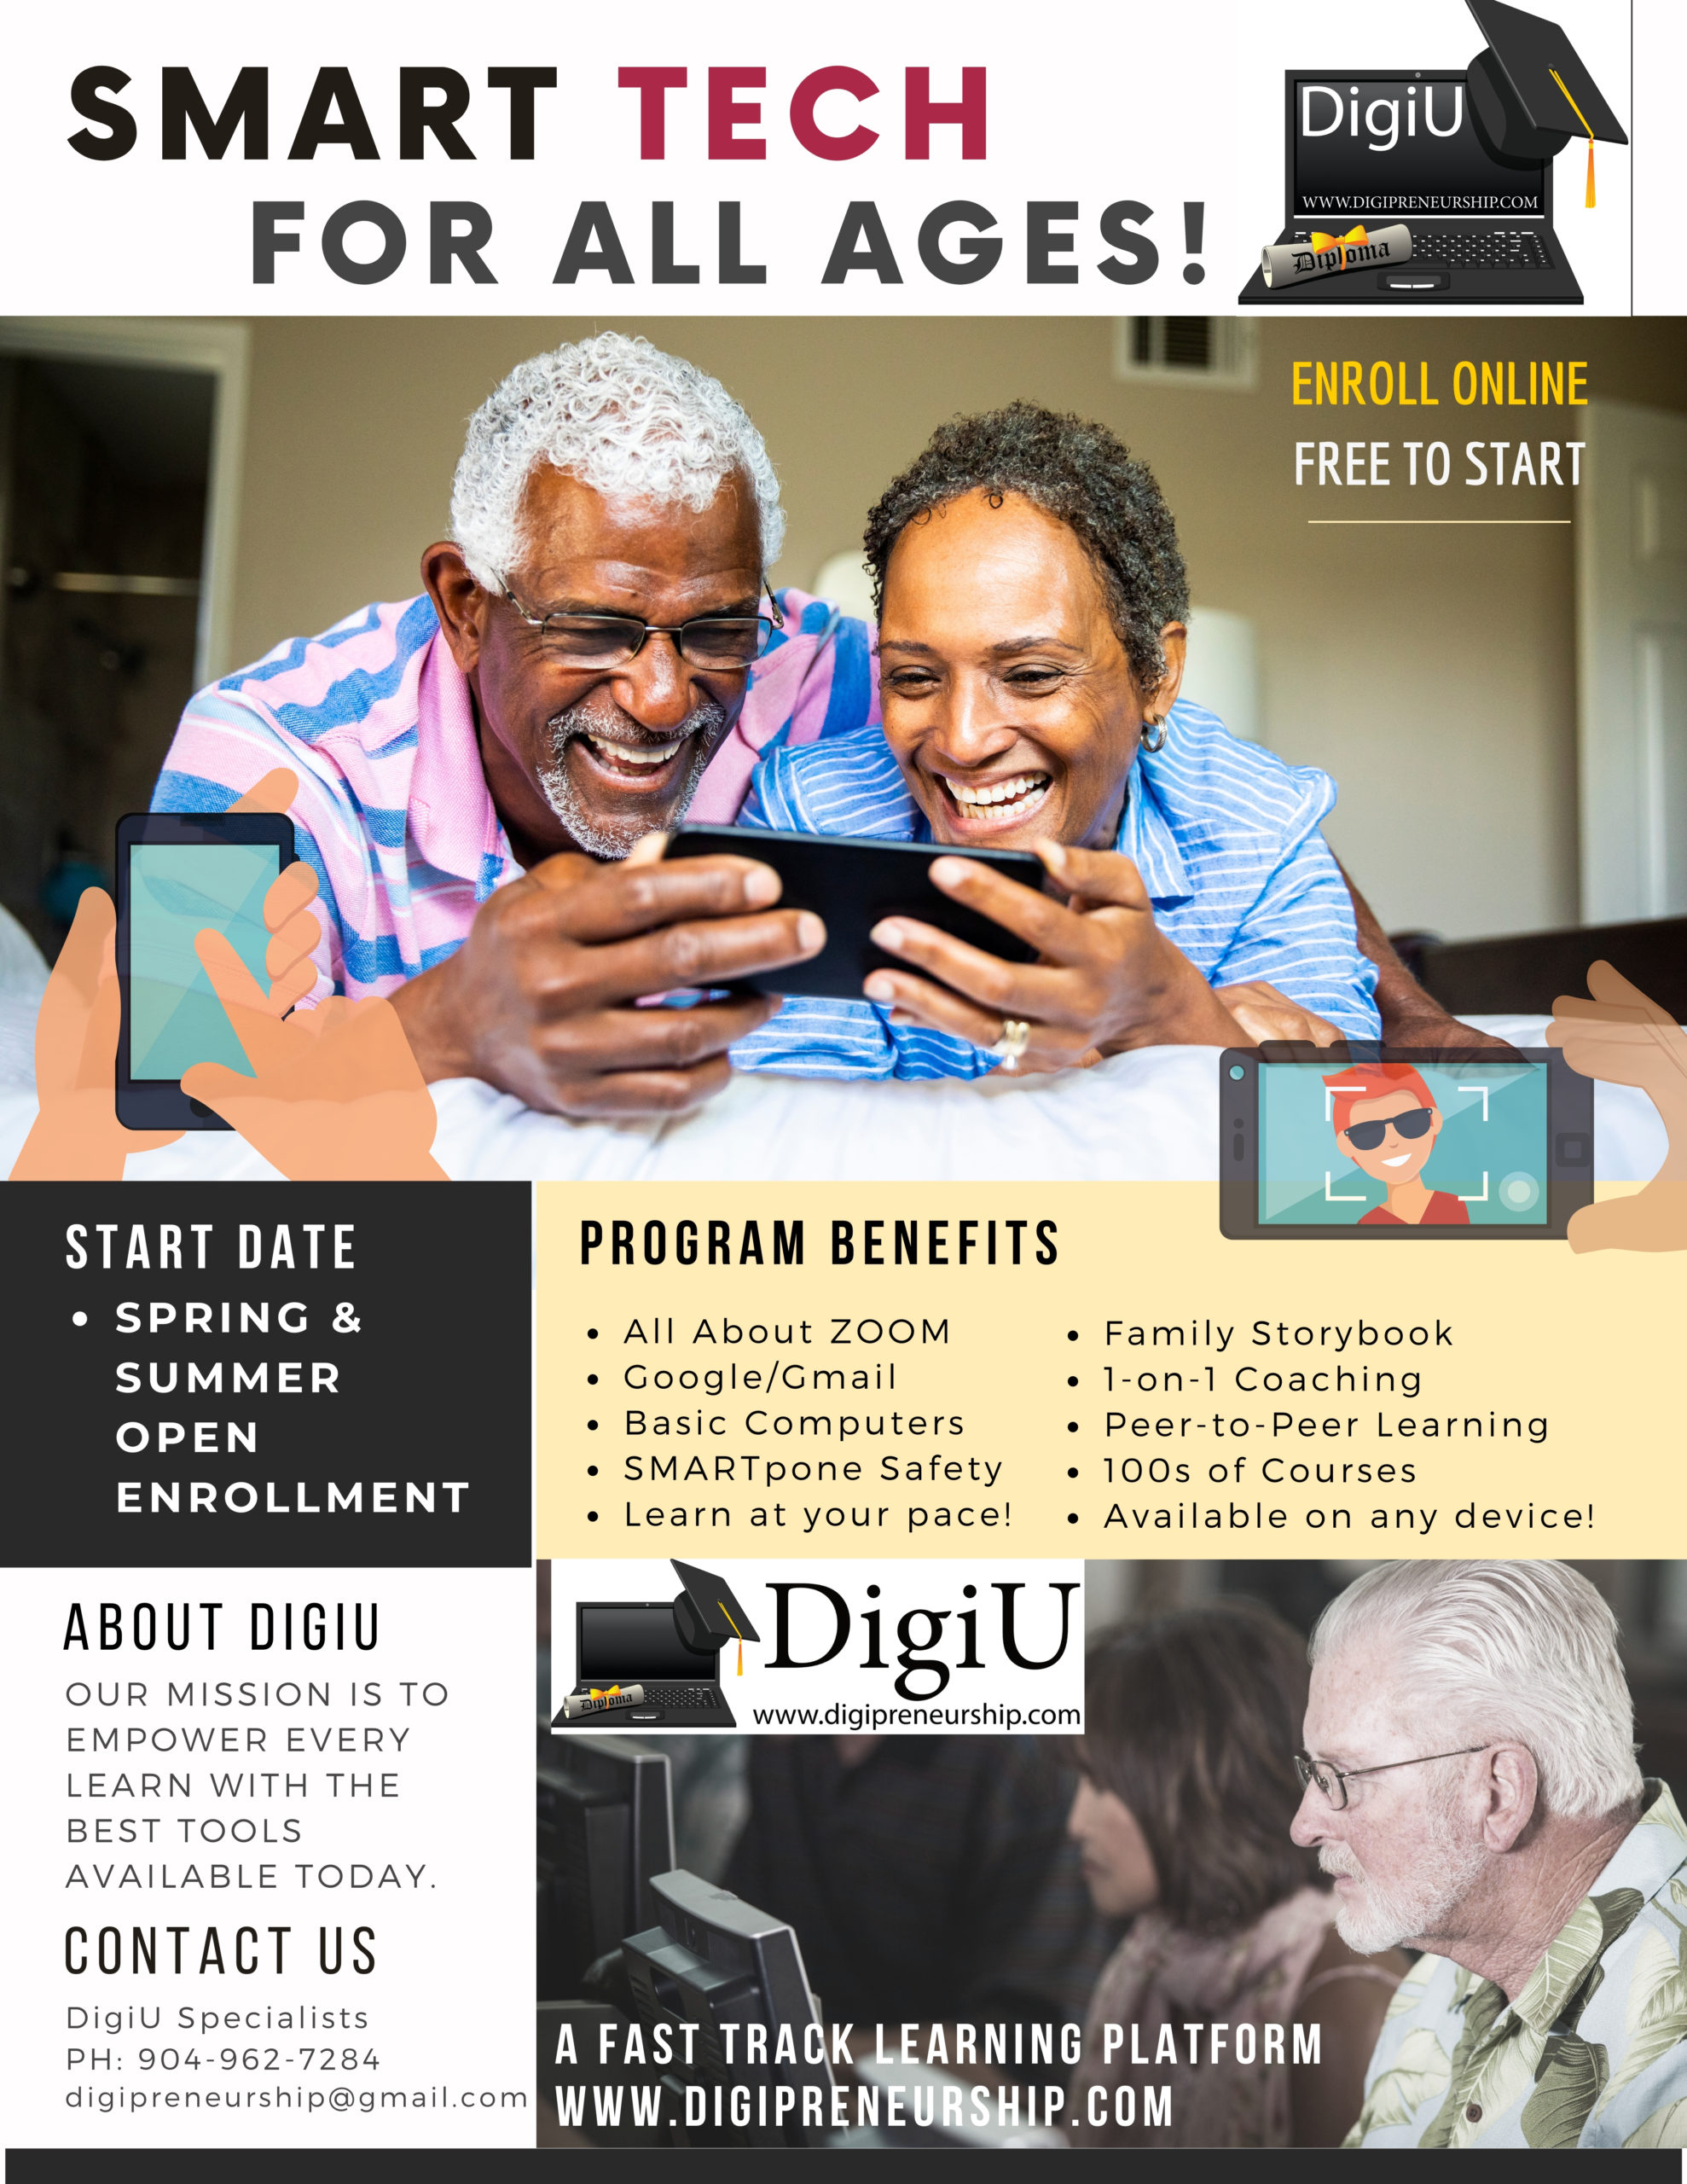 Digipreneurship University Celebrates More than a Decade of Broadband Education for Seniors